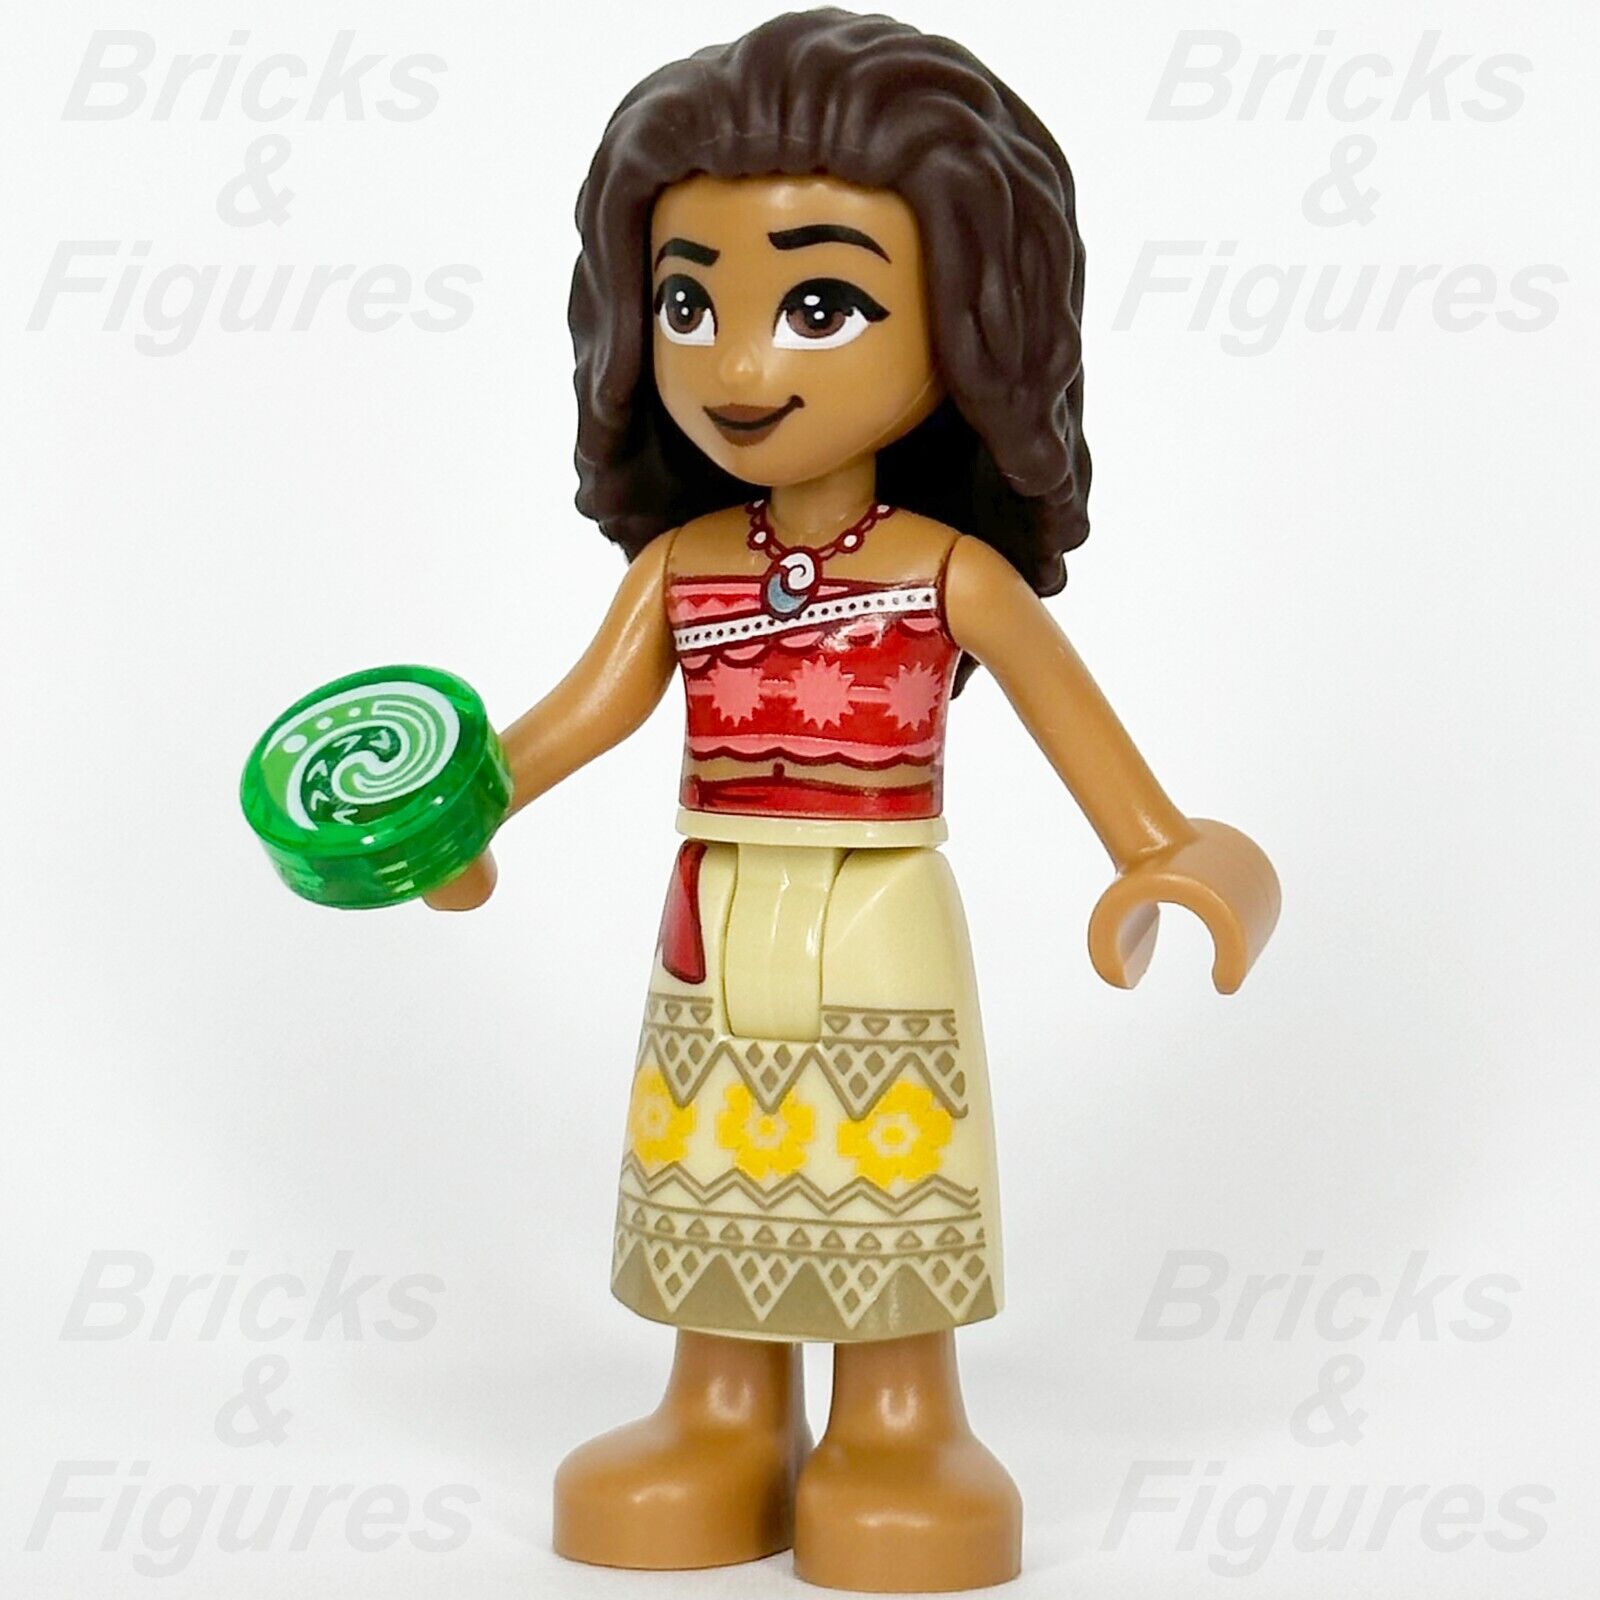 LEGO Disney Princess Moana Minifigure with The Heart of Te Fiti Gem 43205 dp163 2